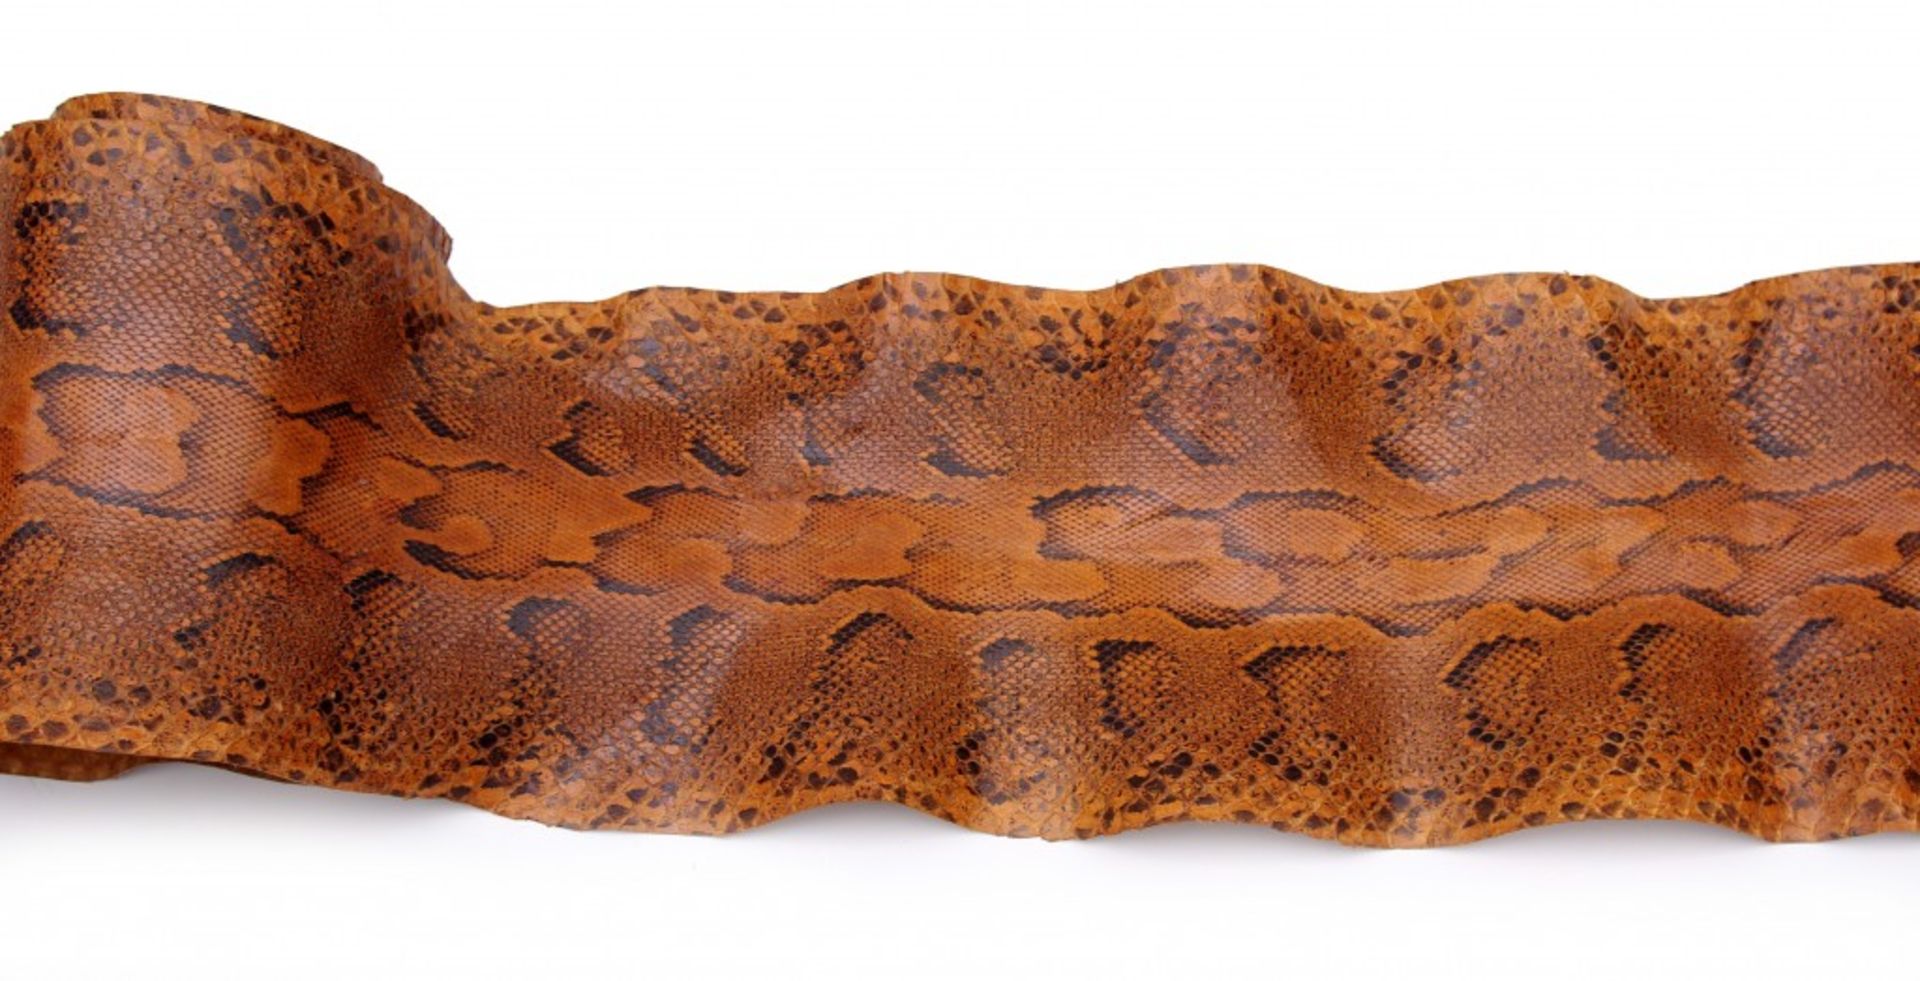 A Python Snake Skin - Image 2 of 2